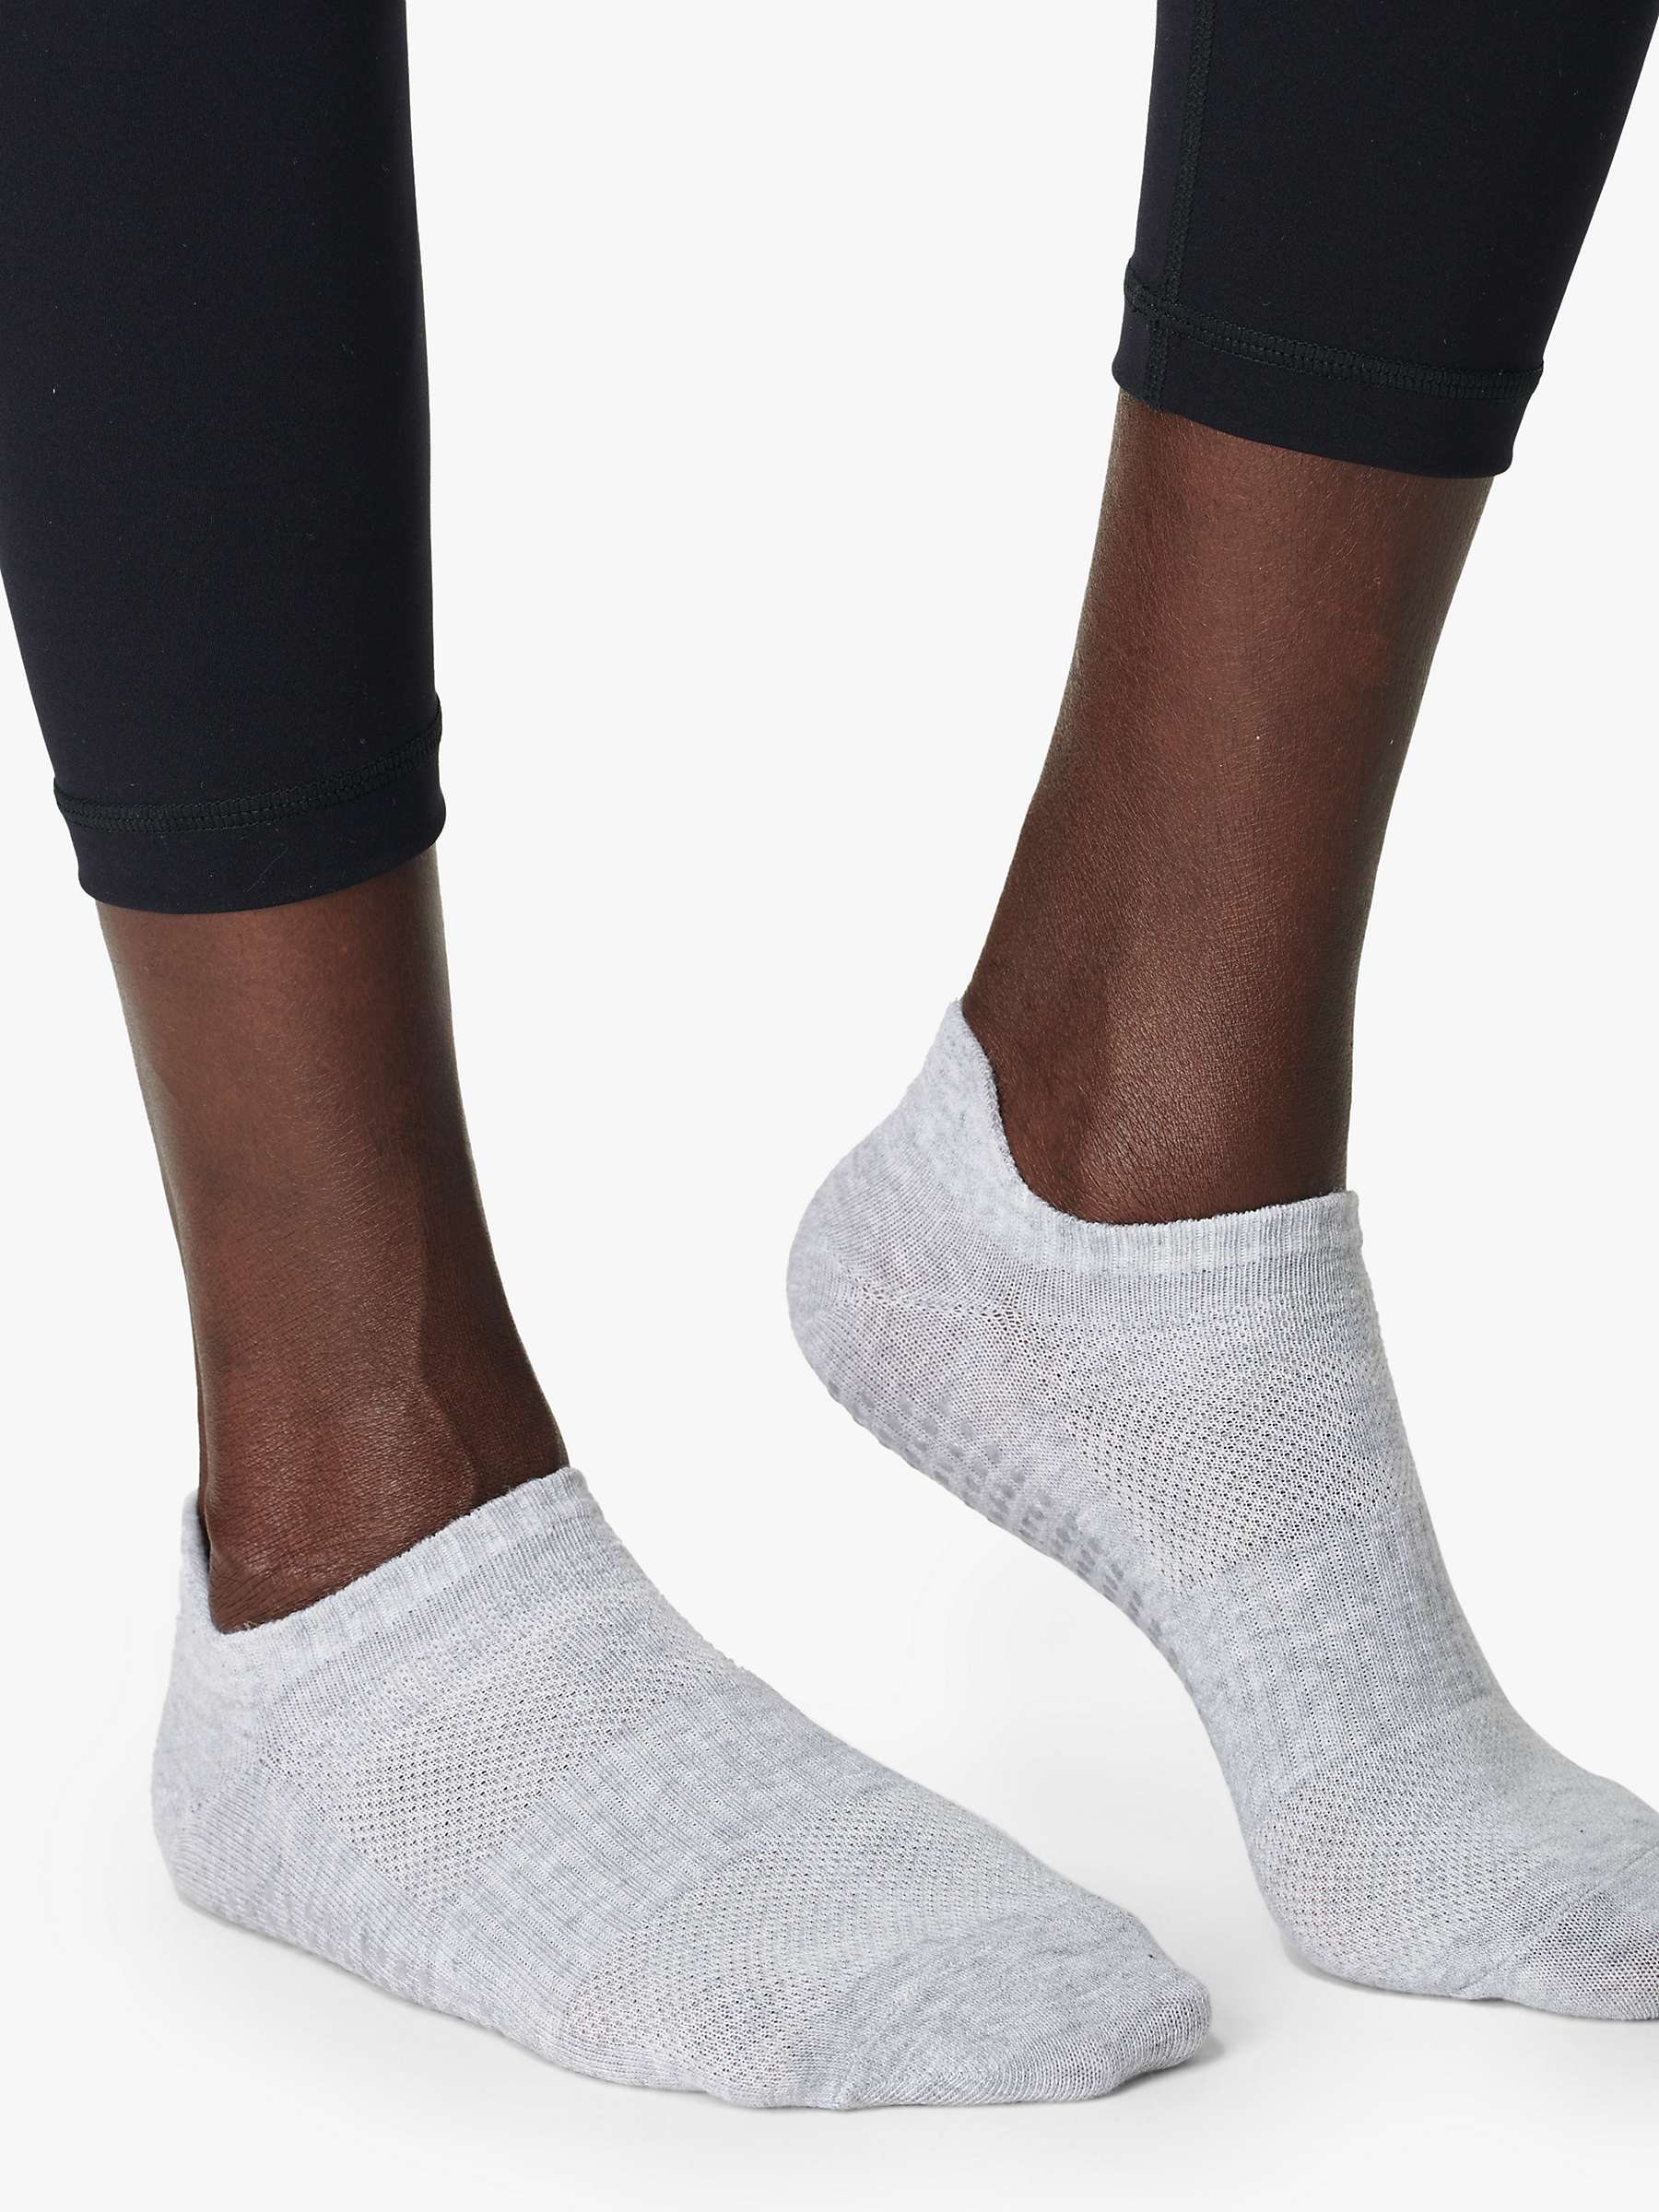 Sweaty Betty Barre Socks, Pack of 2, Black/Grey at John Lewis & Partners